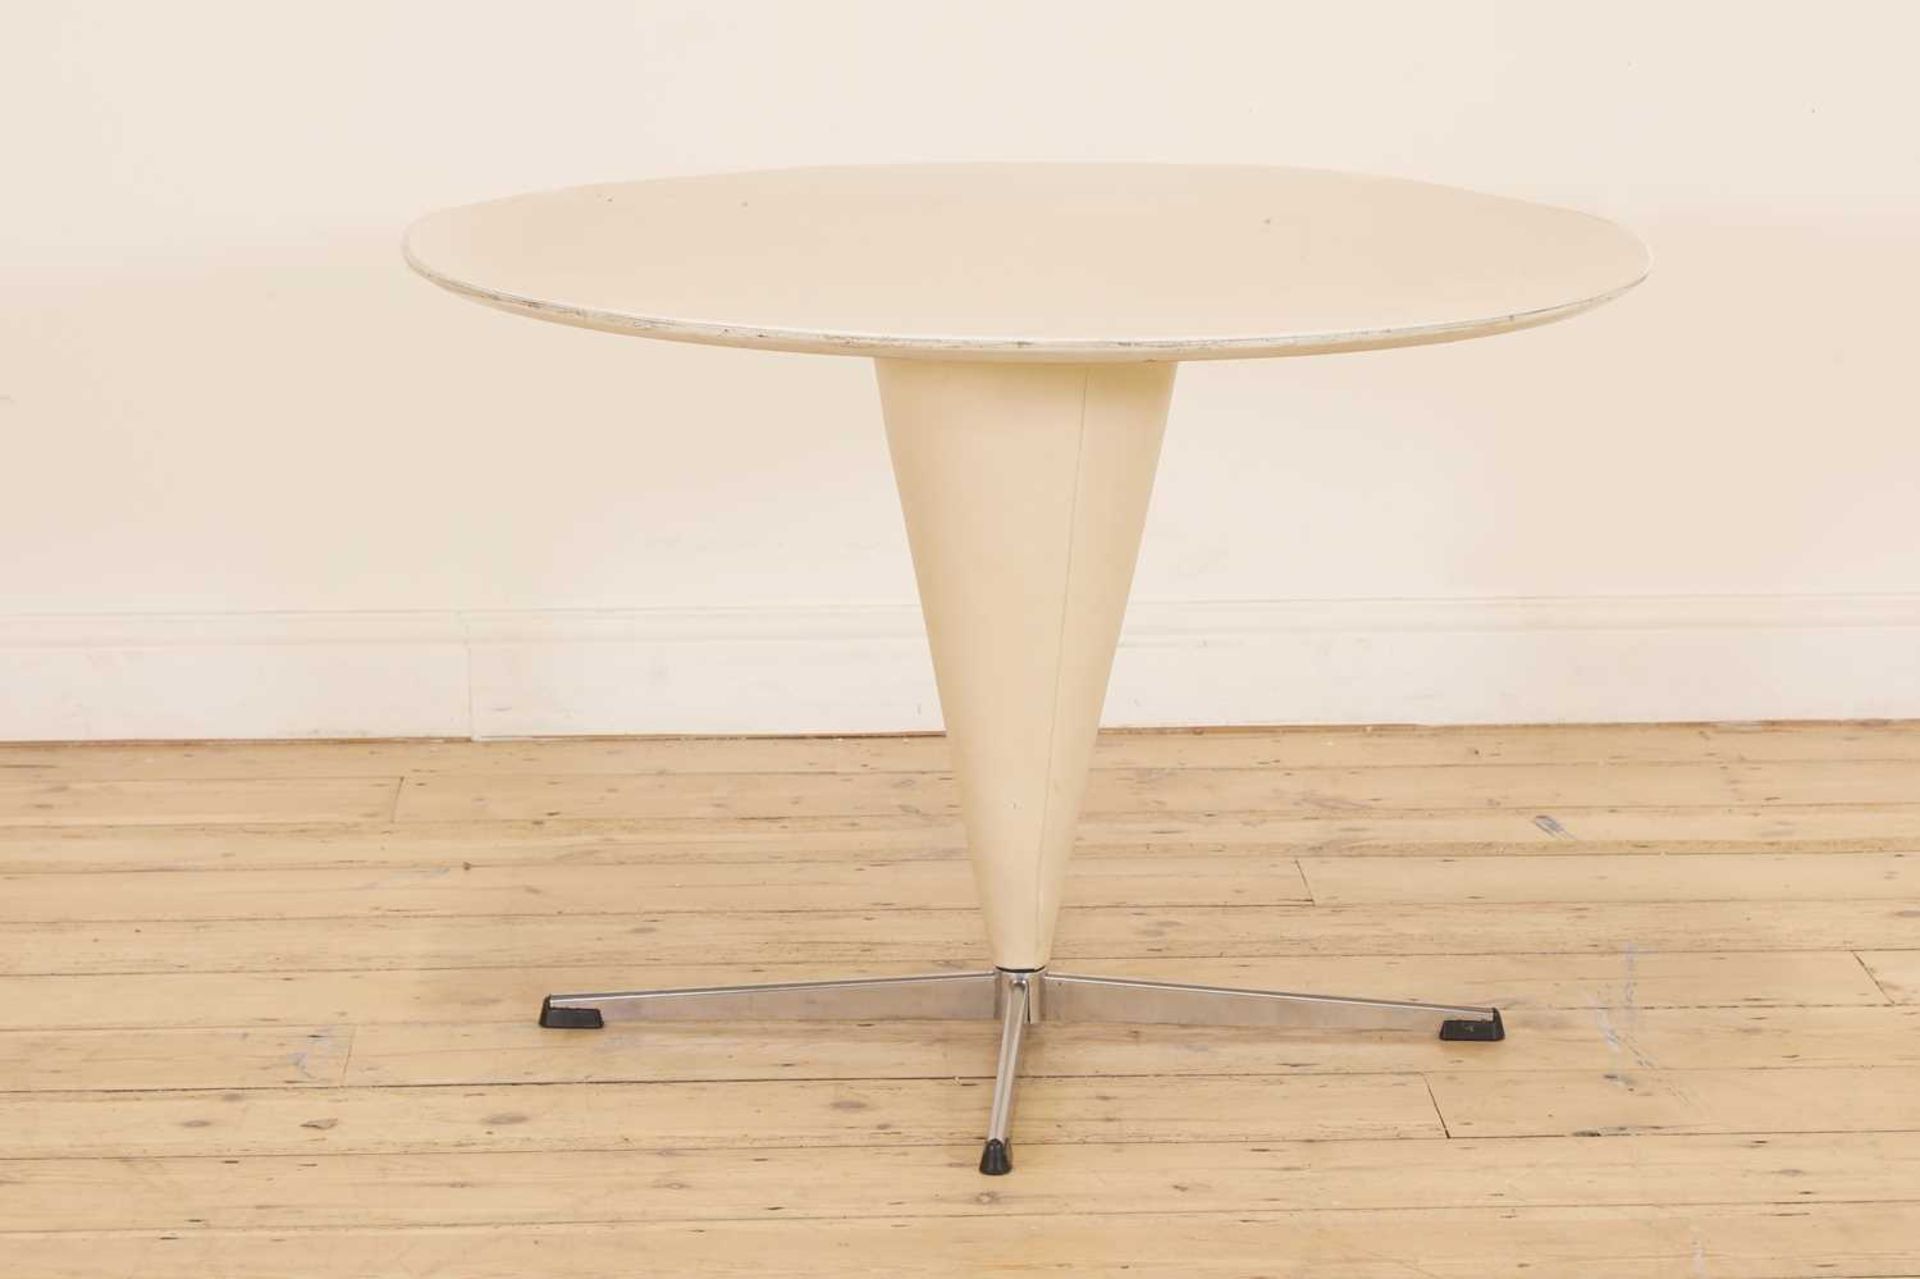 A 'Cone' table,